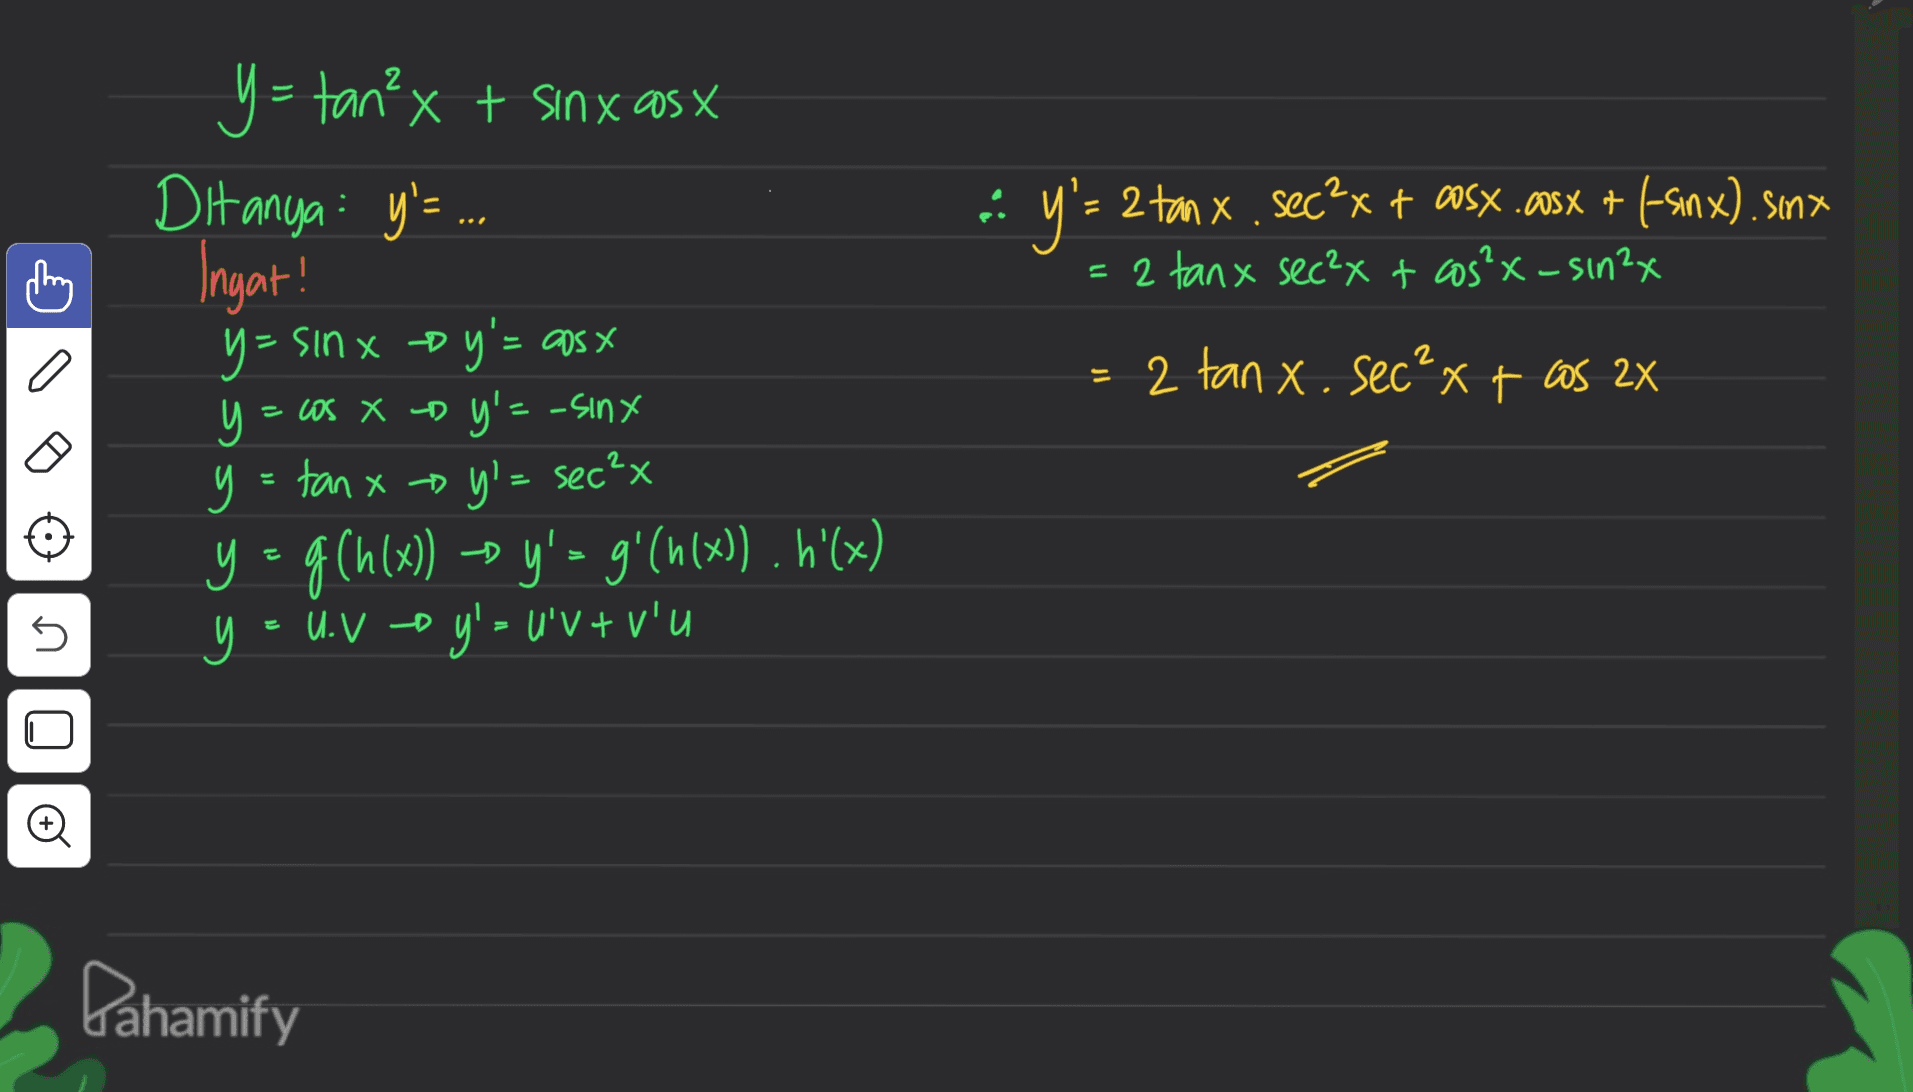 - y'= 2 tan x , sec?x + aosx .csx + 45.nx).smx = 2 tanx sec?x + cos²x-sin2x y= tan²x t sinxasx Ditanya : y'= ... Ingat! y y=sinx by'= cosx о y os X D y'= -sinx y = tan x + y! = sec?x y = g(h(x)) = y'= g'(h(x)) . h'(x) y = UV y'- U'V + V'U = 2 tan x. sec²x + cos 2X o n Pahamify 